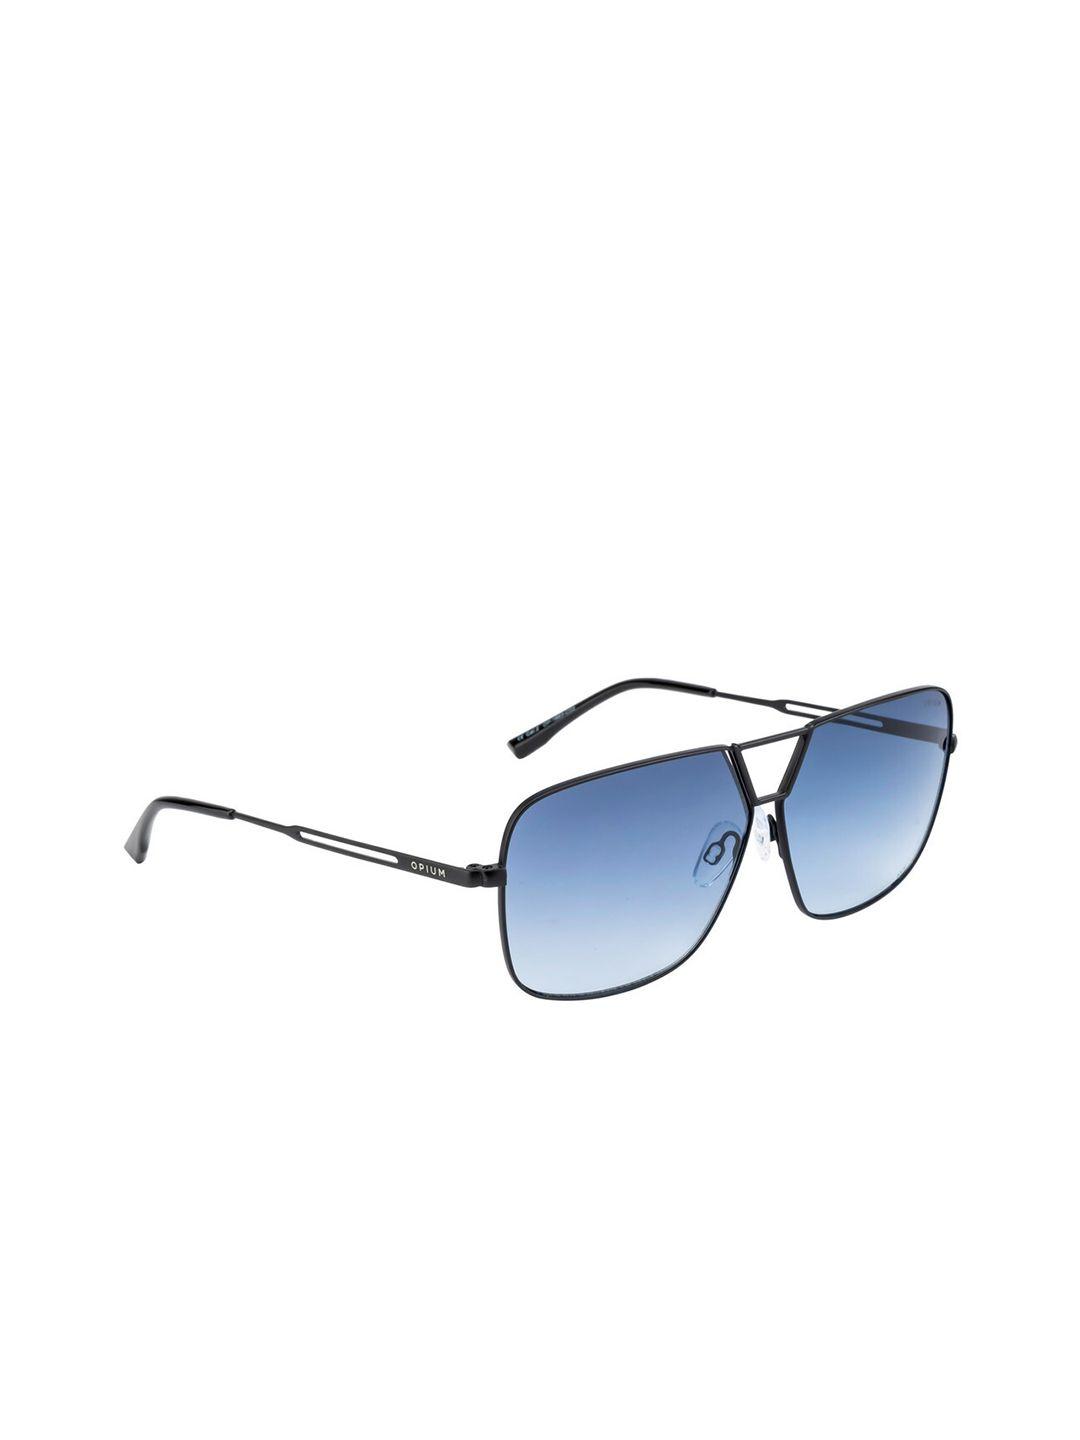 opium men blue lens & black rectangle sunglasses with uv protected lens